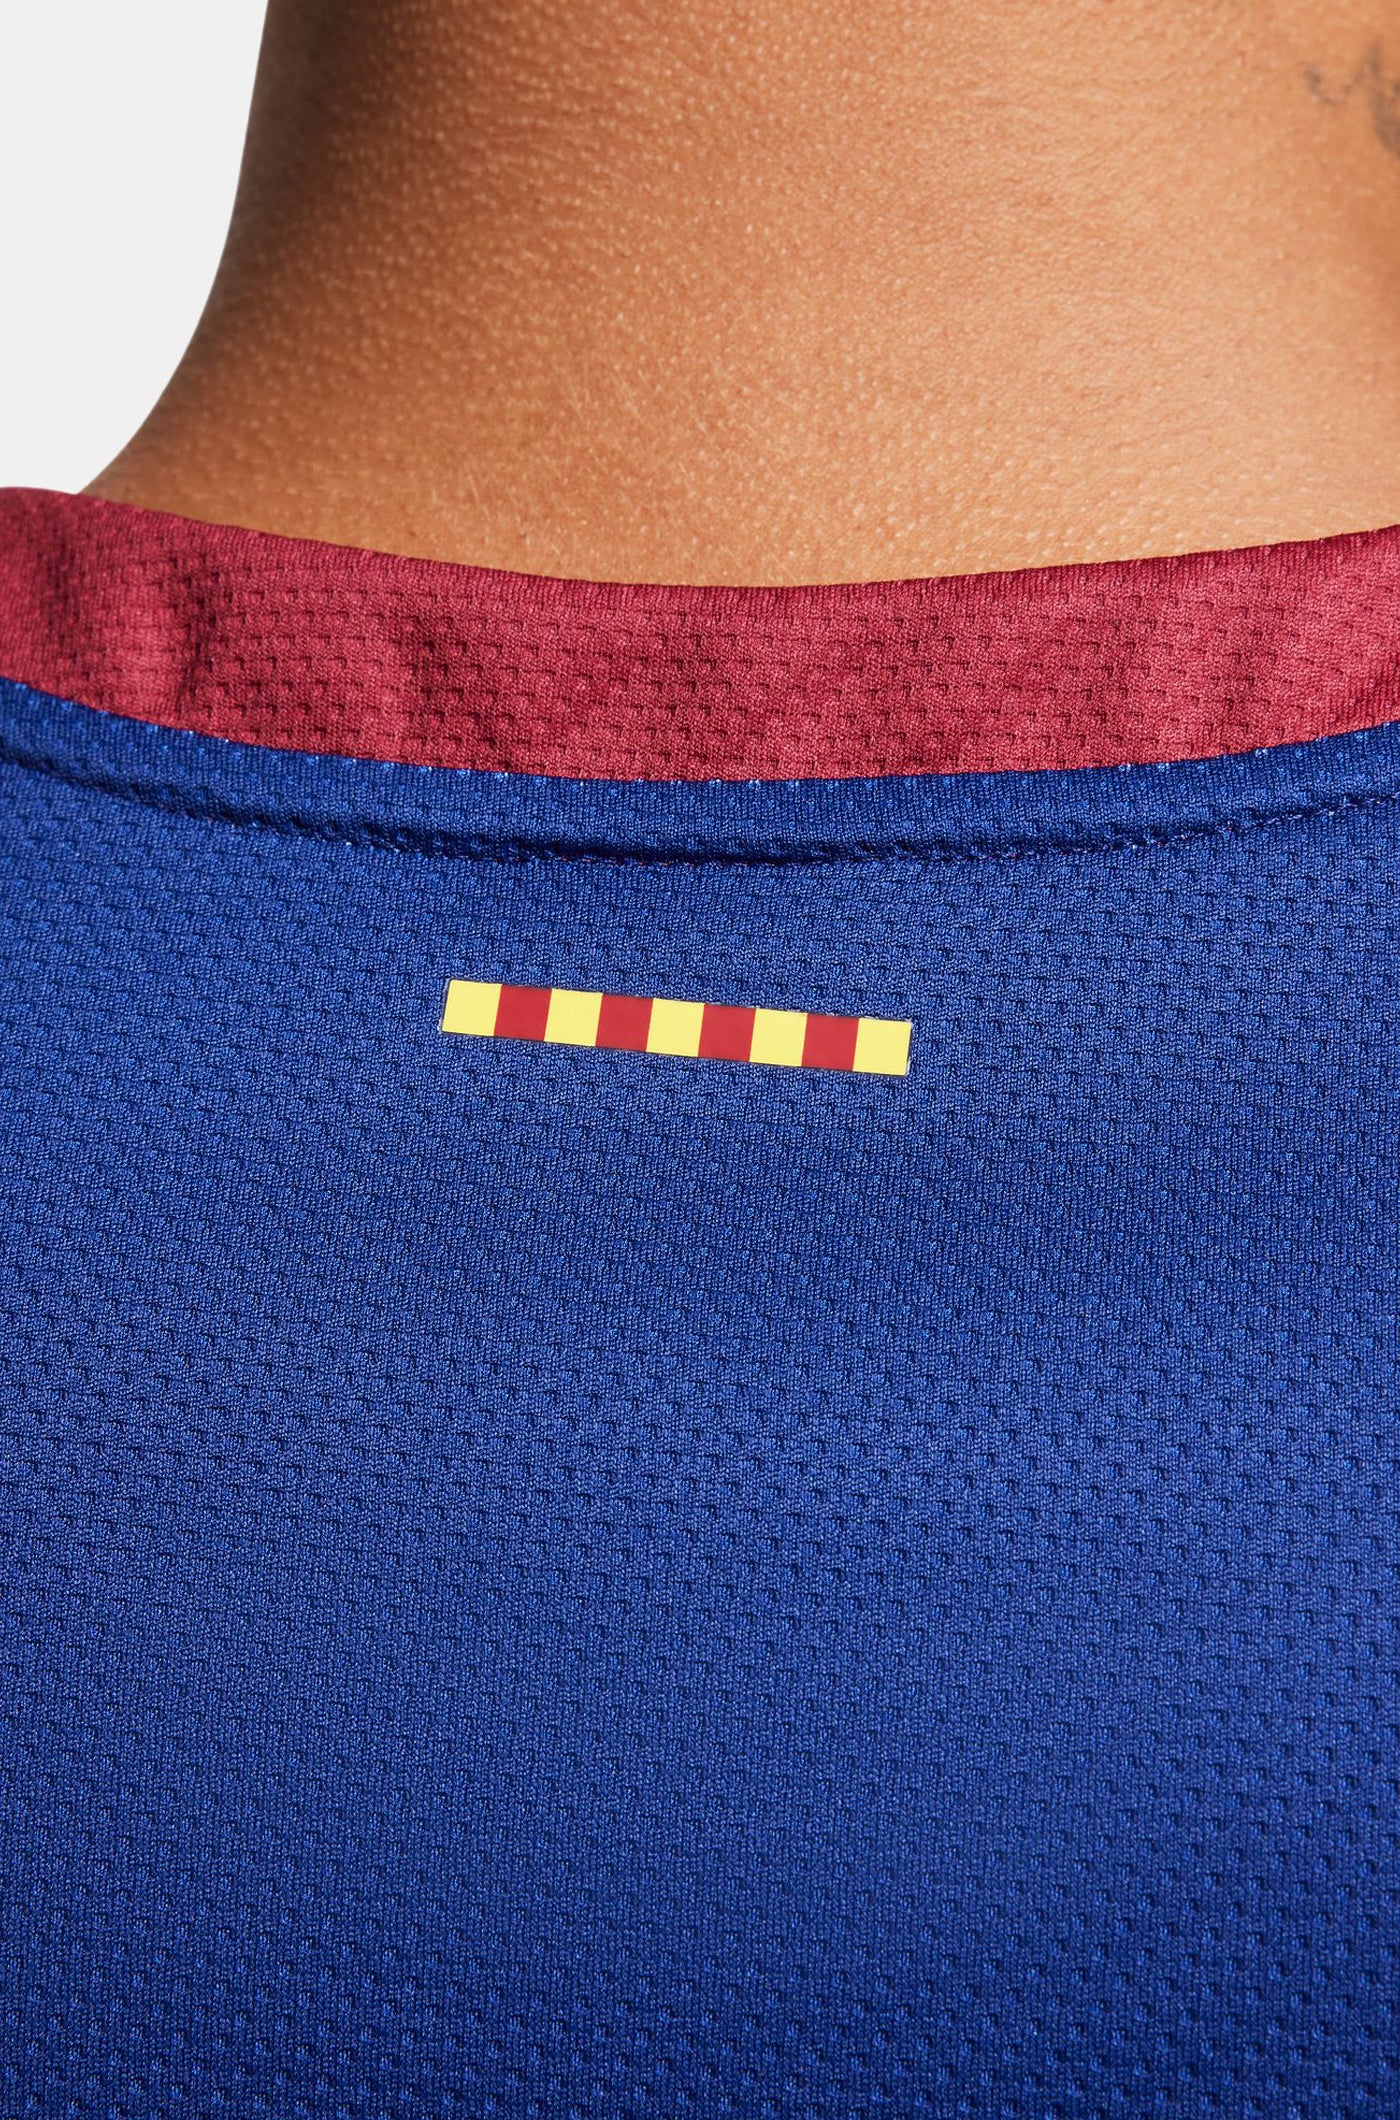 Euroleague FC Barcelona home basketball shirt 23/24 - SATORANSKY